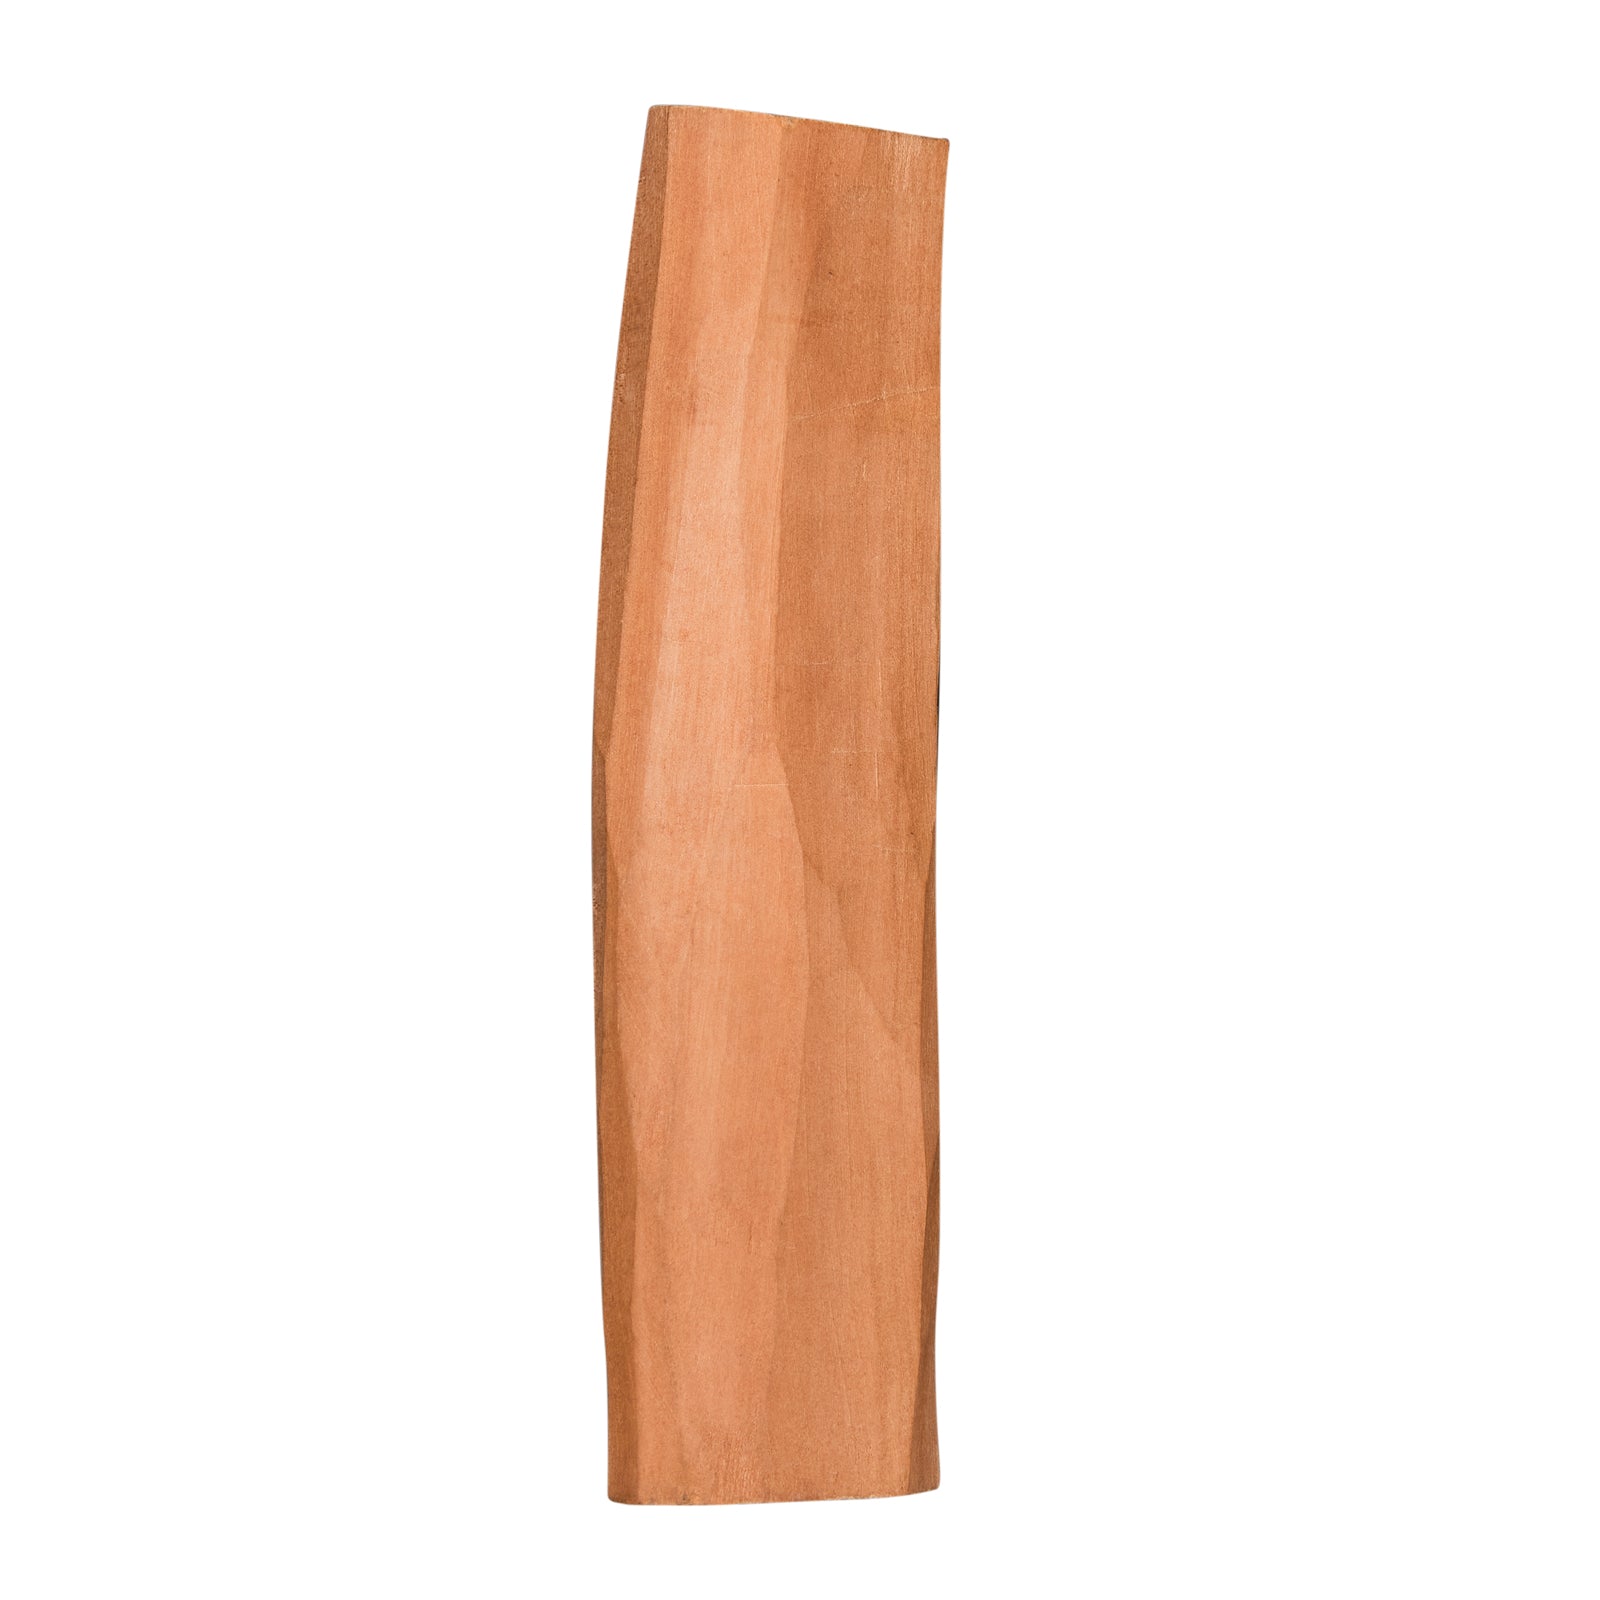 Natural Sandalwood Stick / Natural Chandan stick for skin, face and Pooja - Naturalis